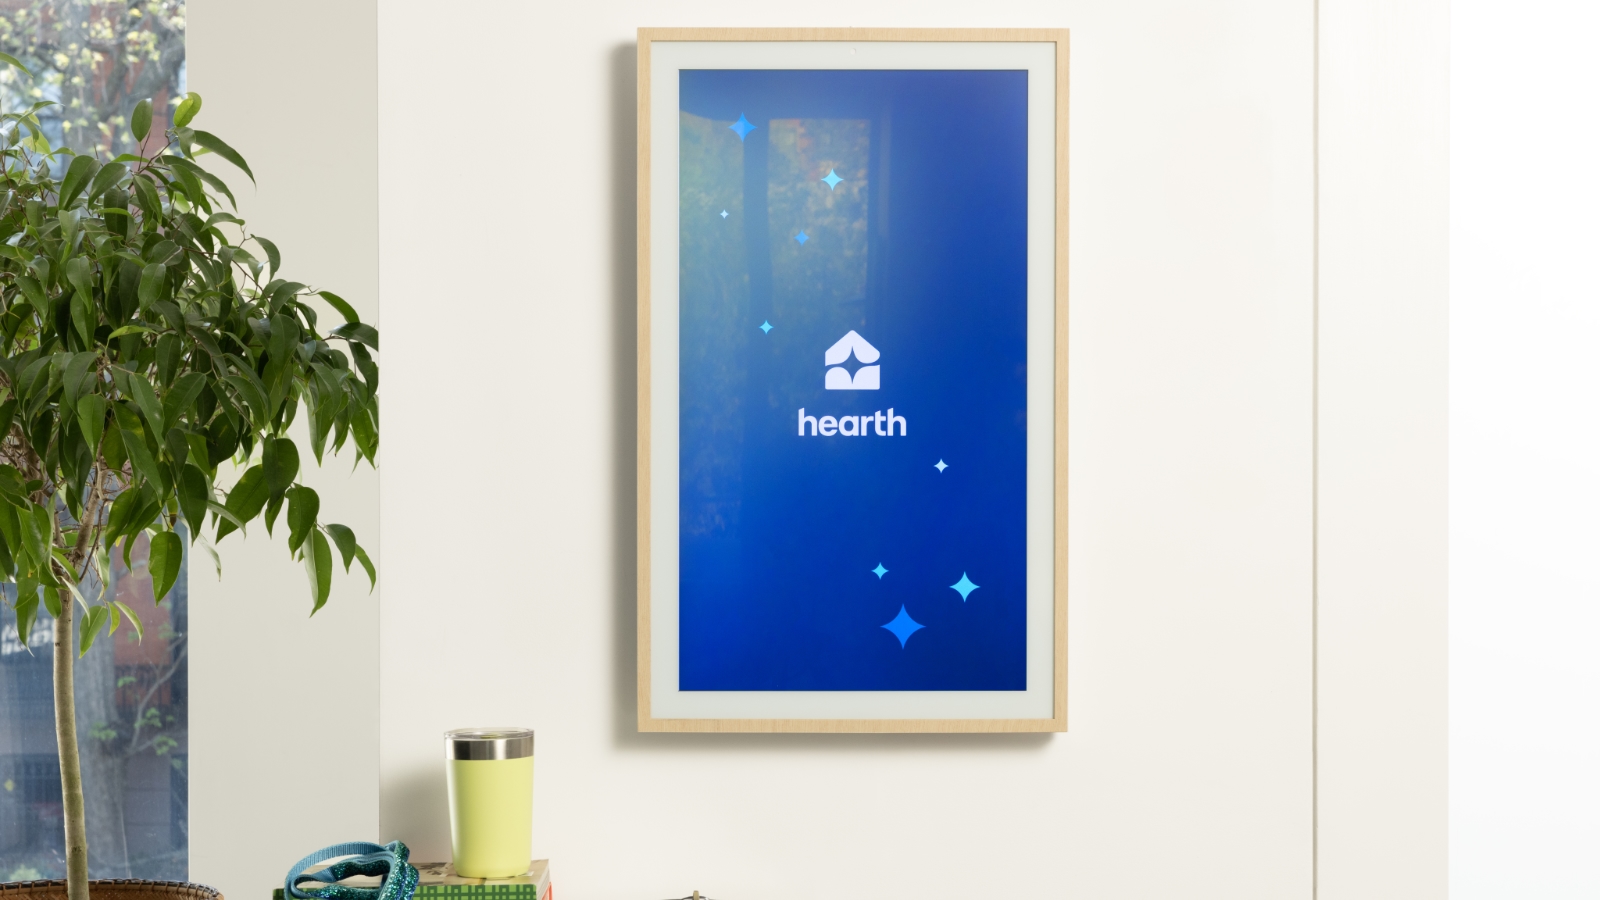 Smart display company Hearth Display raises $4.6M additional funding